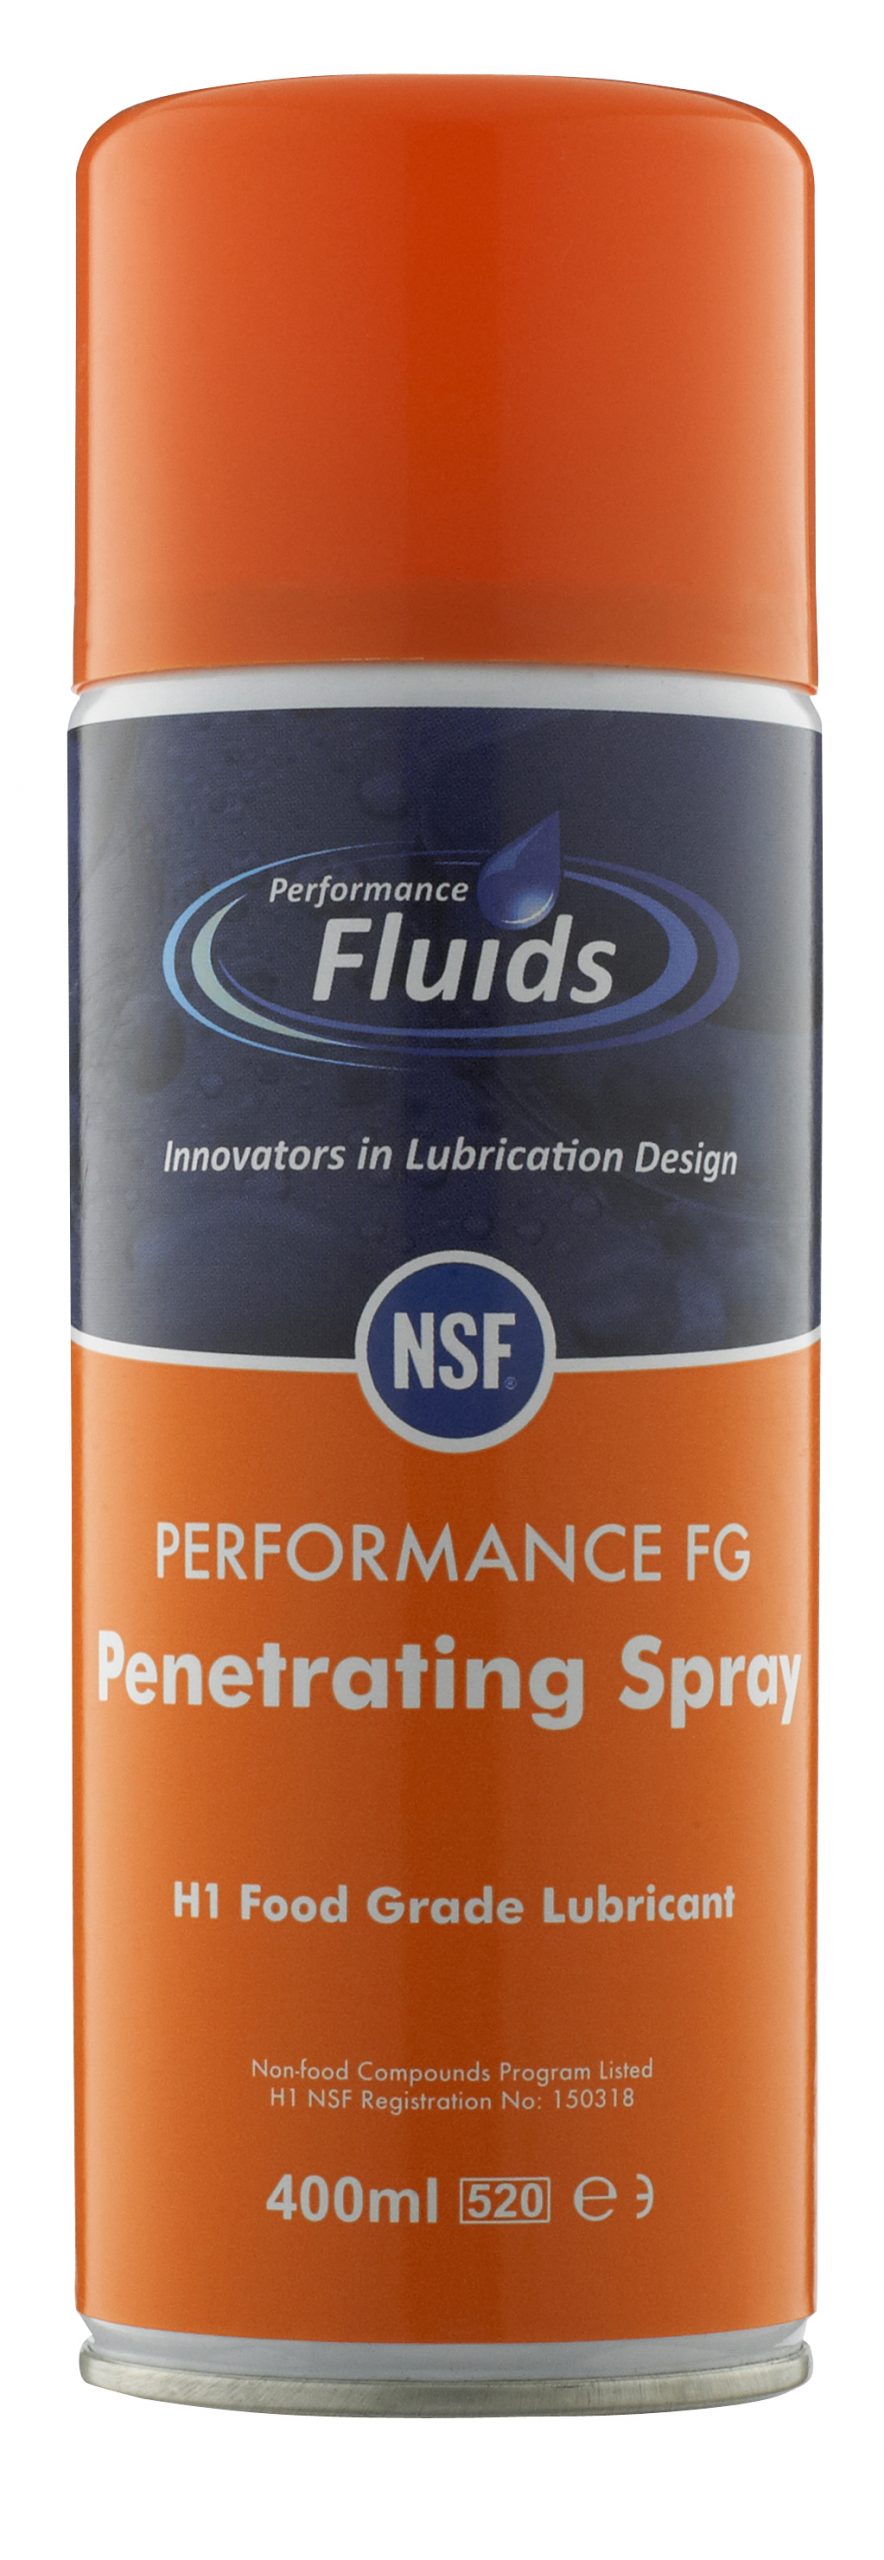 Benefits of Penetrating Spray & Aerosol